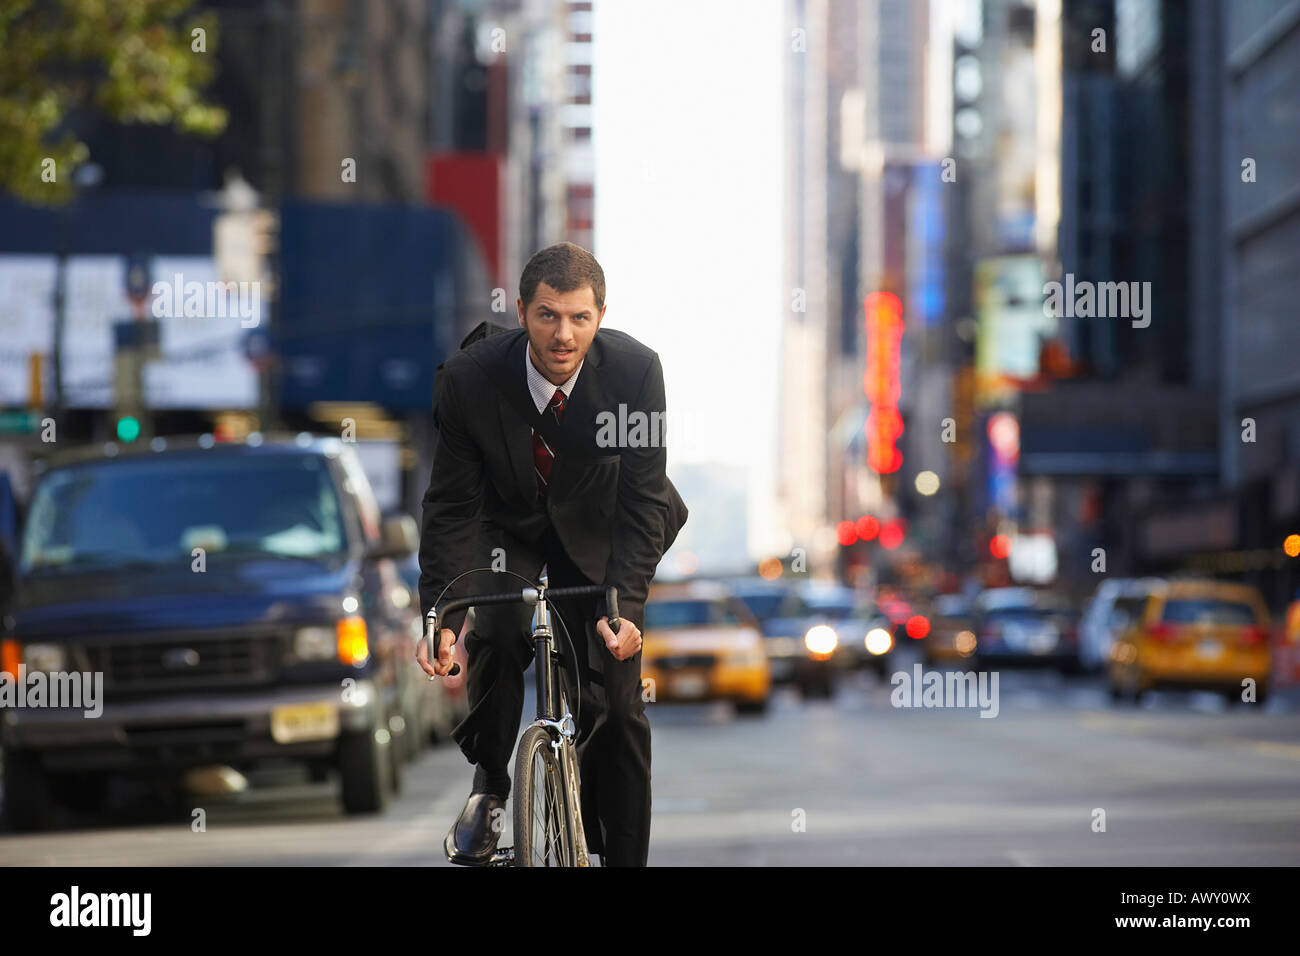 Man riding bicycle on street Stock Photo